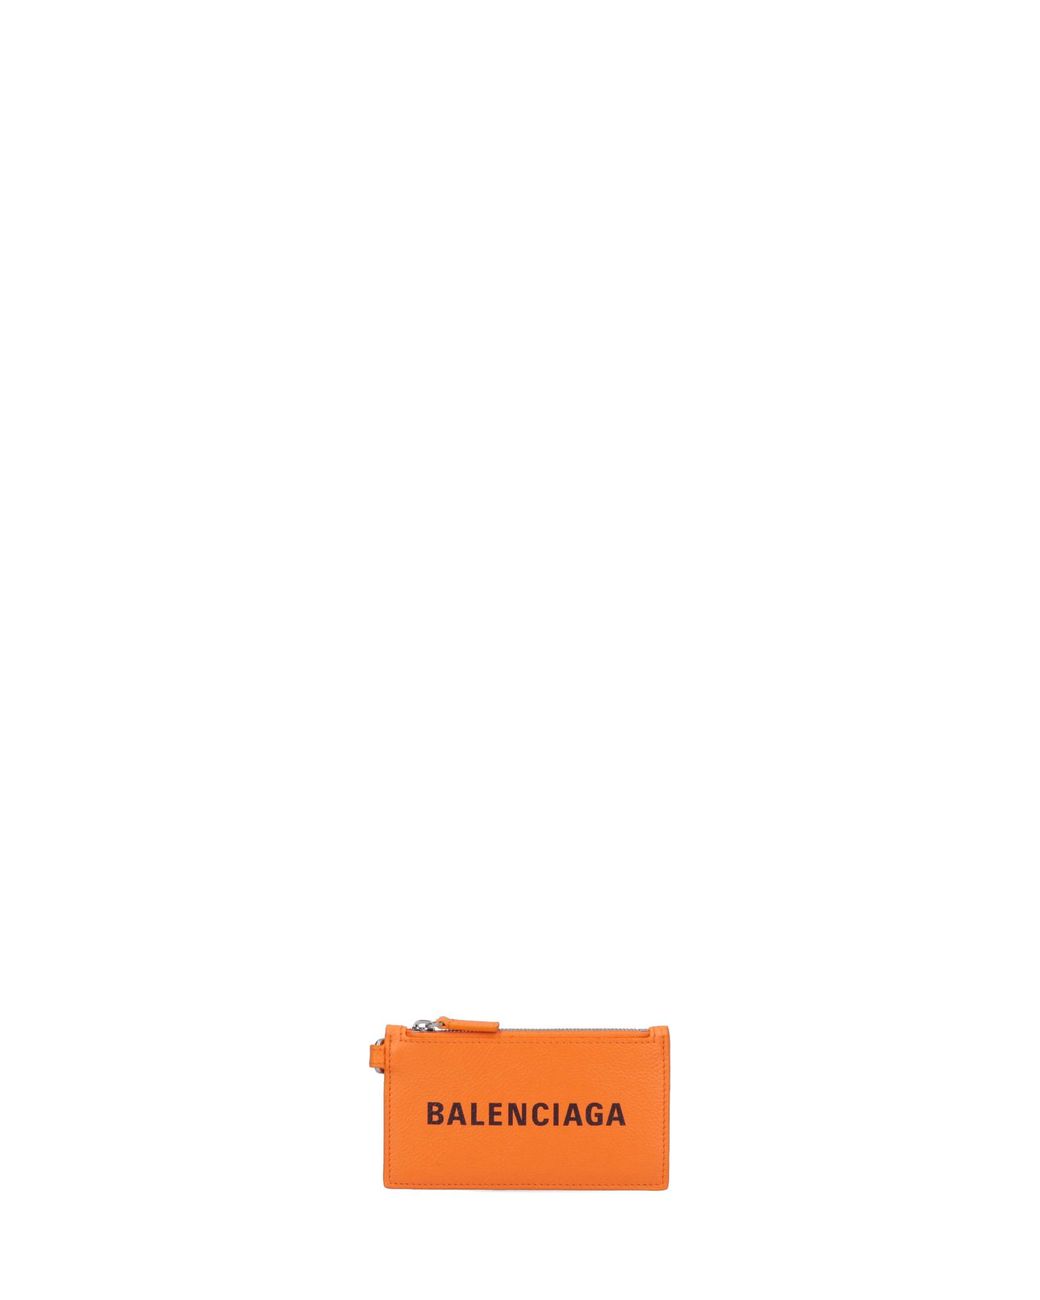 Balenciaga Strap Cardholder in Orange (White) for Men - Save 9% | Lyst